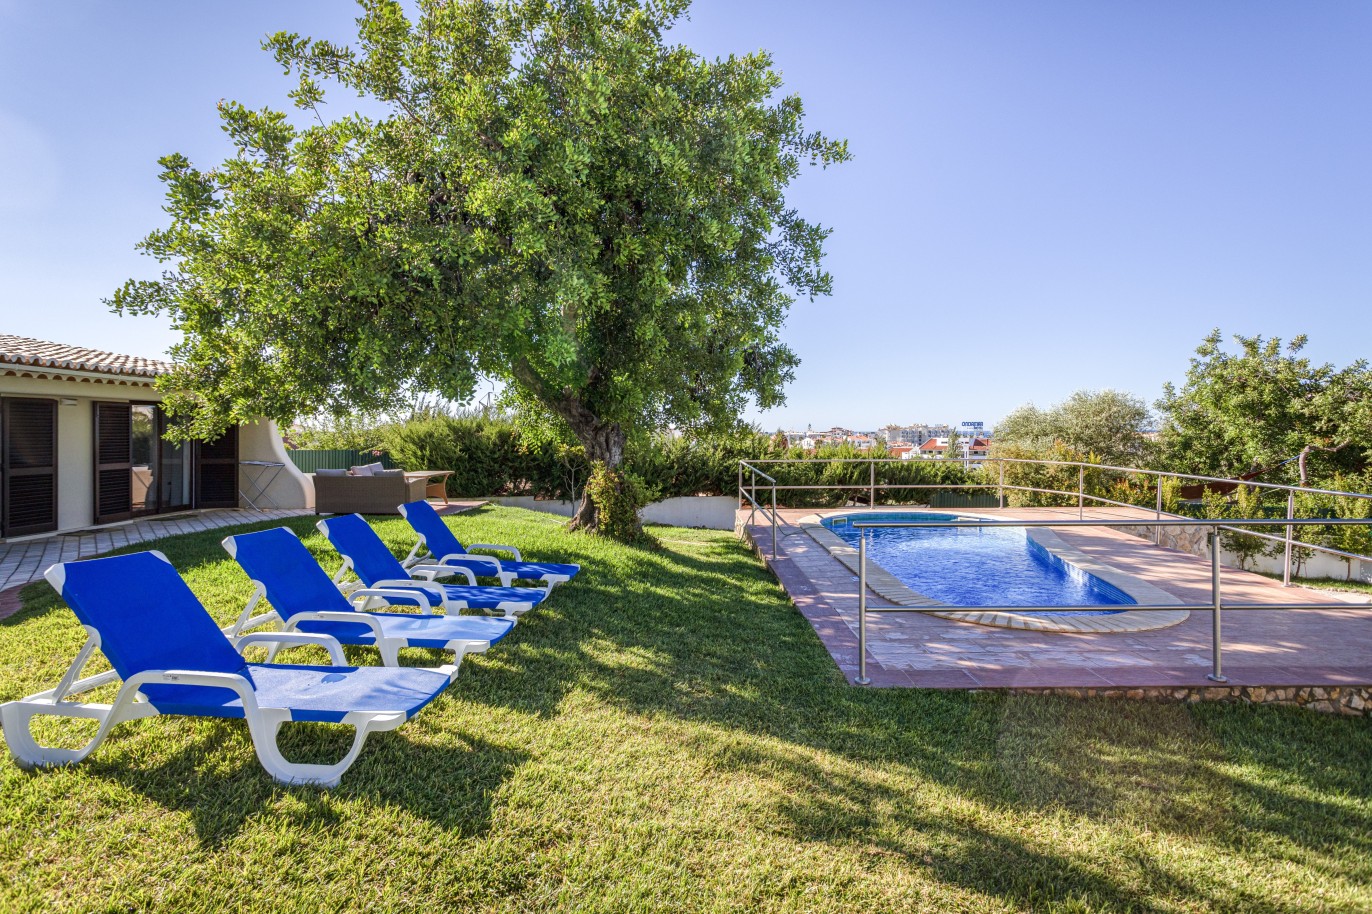 4 bedroom villa with pool, for sale in Albufeira, Algarve_233609